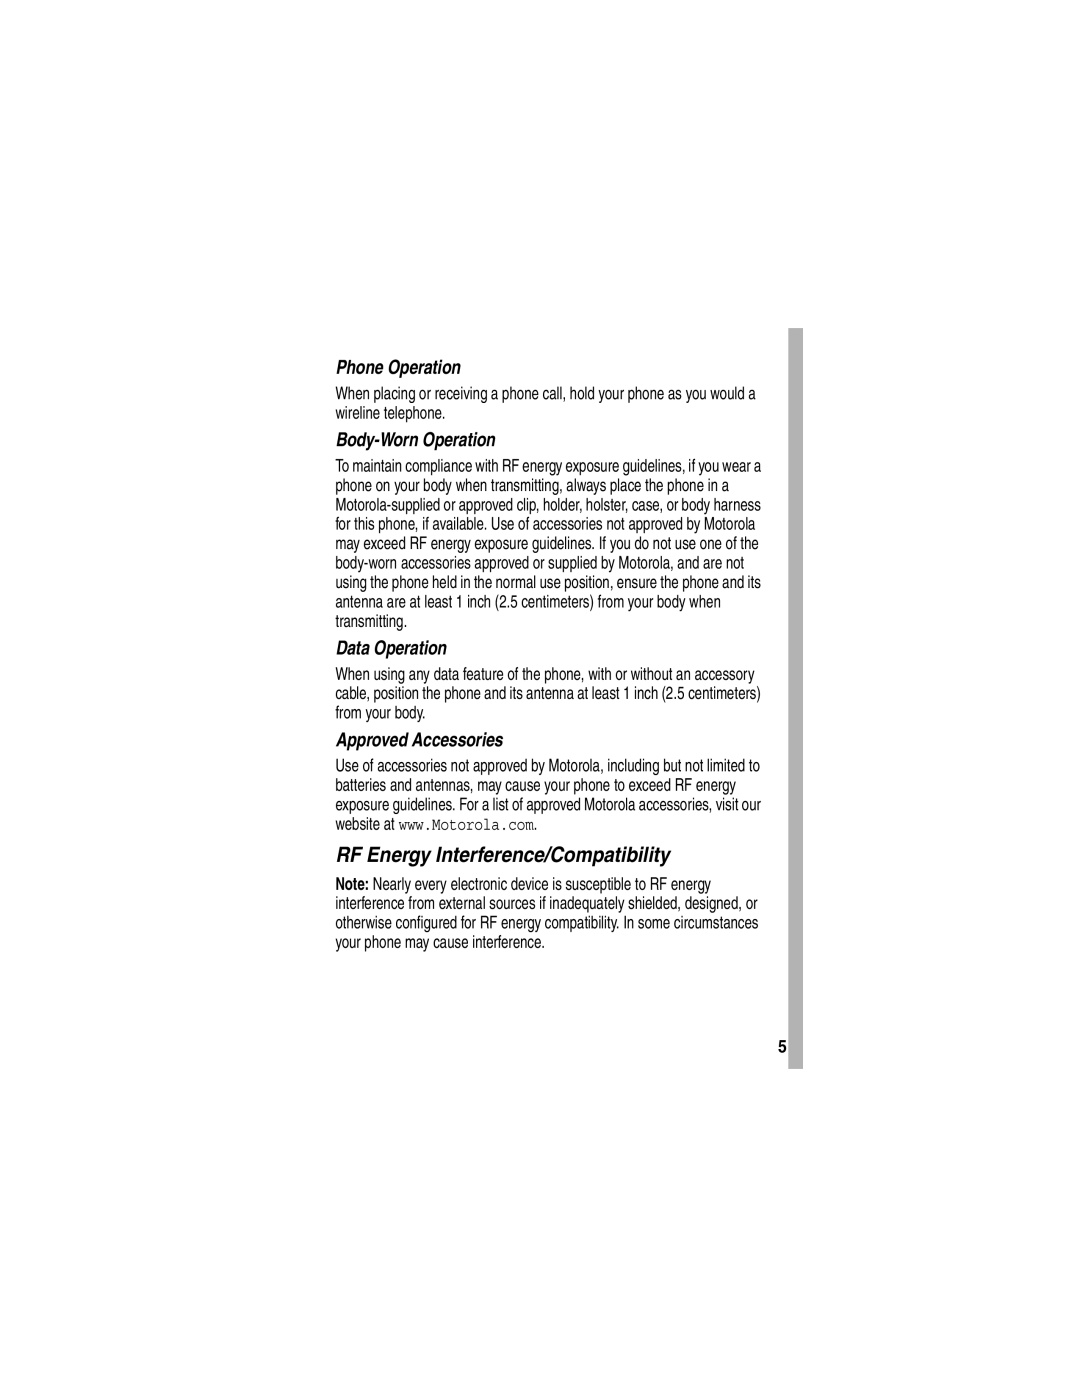 Motorola V186 manual RF Energy Interference/Compatibility, Body-Worn Operation 